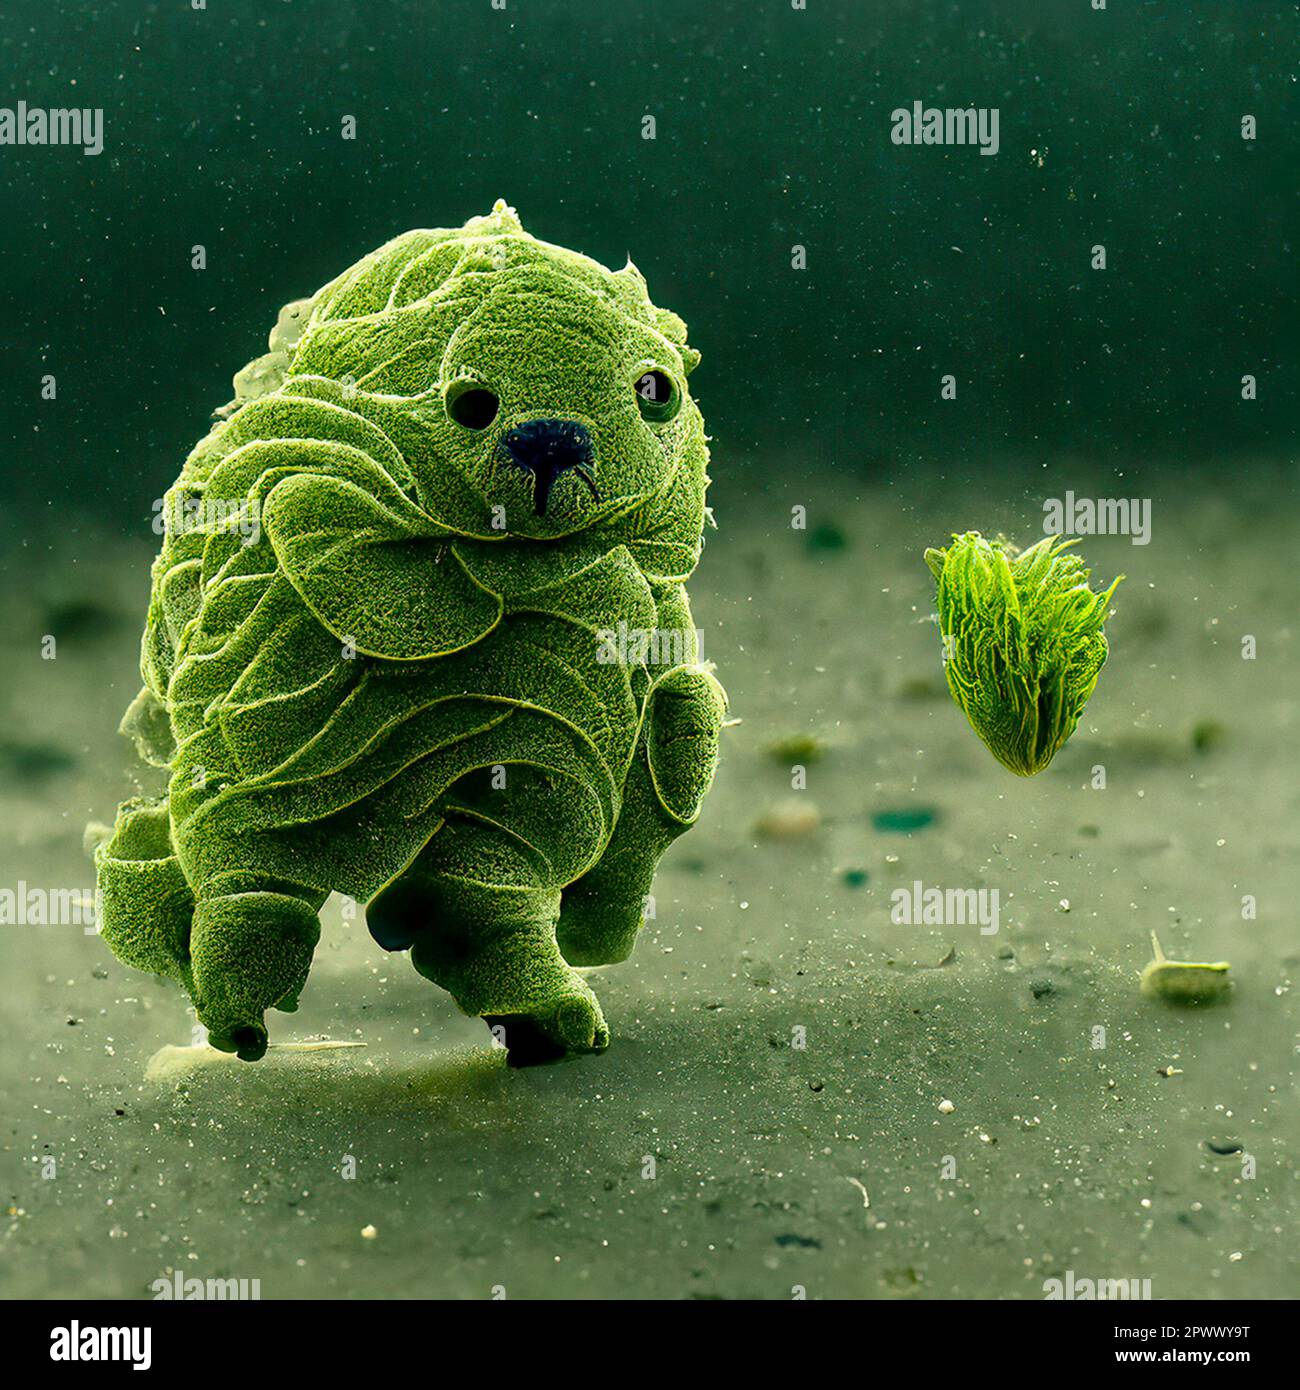 A Cute Microscopic Tardigrade Going for a Stroll Through Some Algae Stock Photo